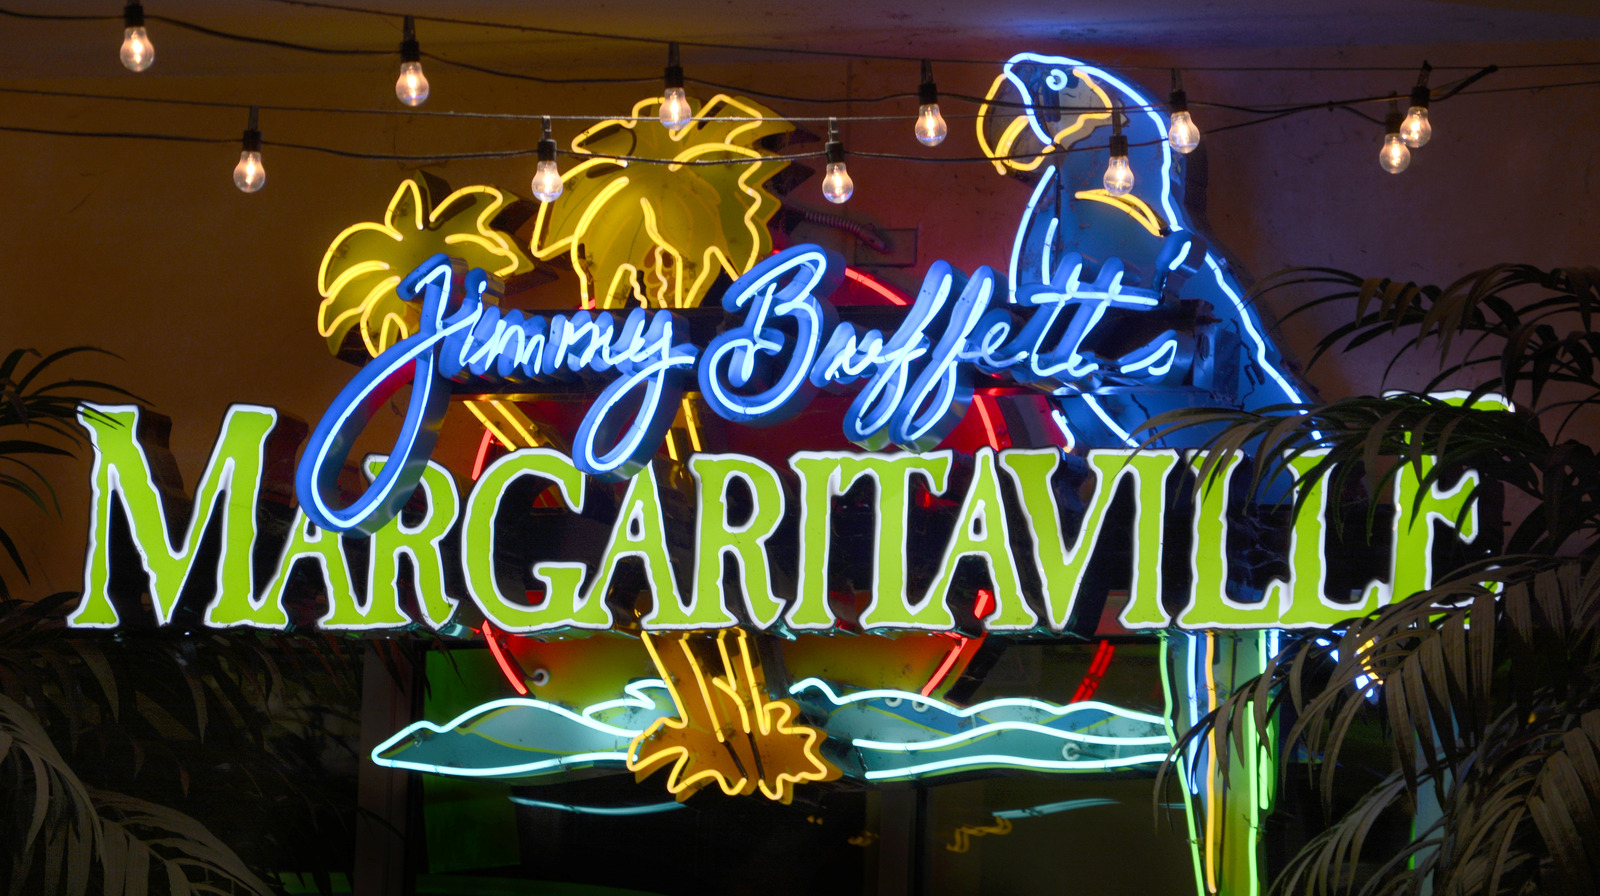 Margaritaville Night